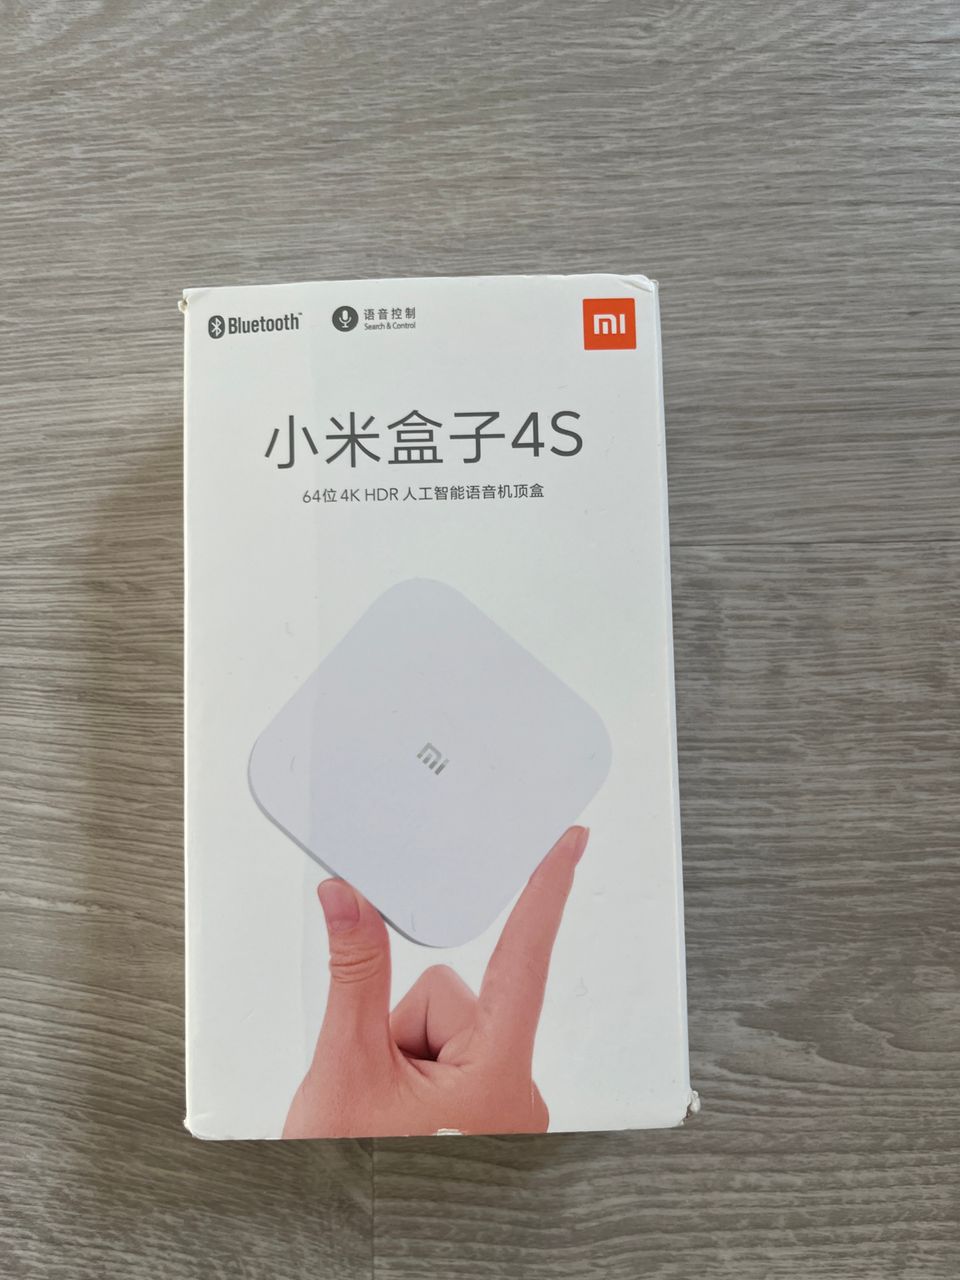 Xiaomi new TV box